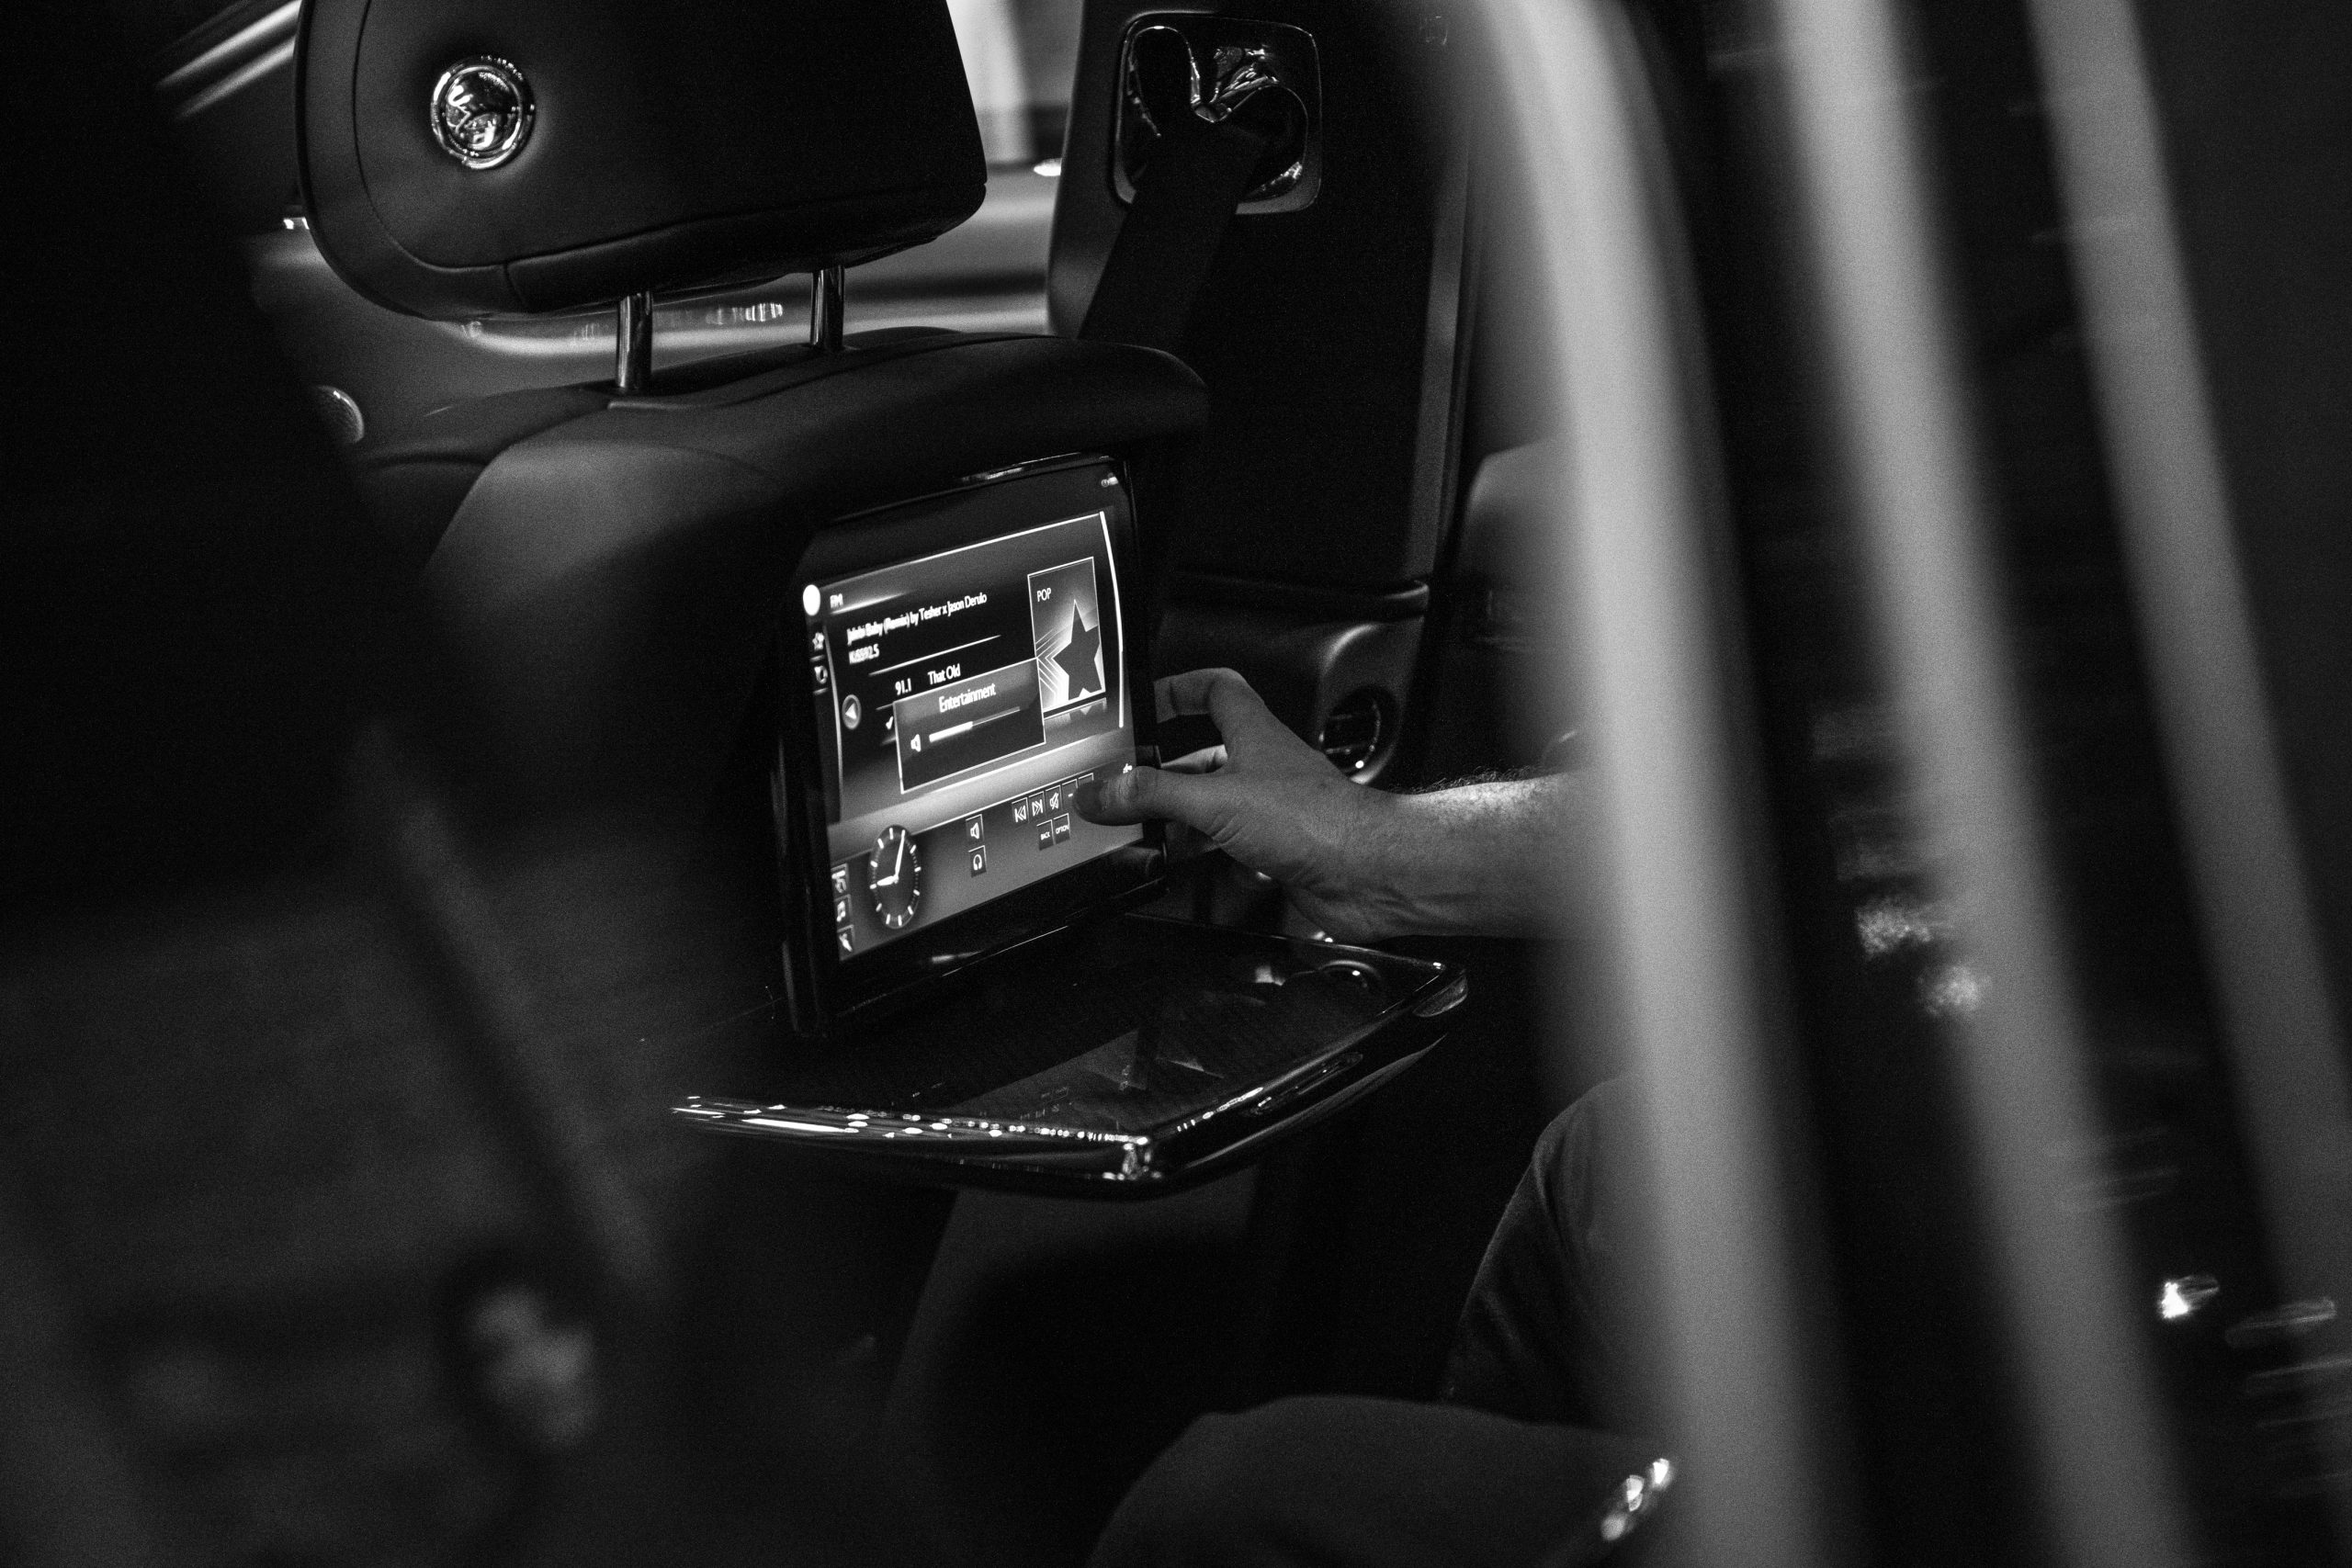 PFW spotting: The Rolls Royce of laptop cases. From Chanel…  www.instagram.com/elinklingdotcom